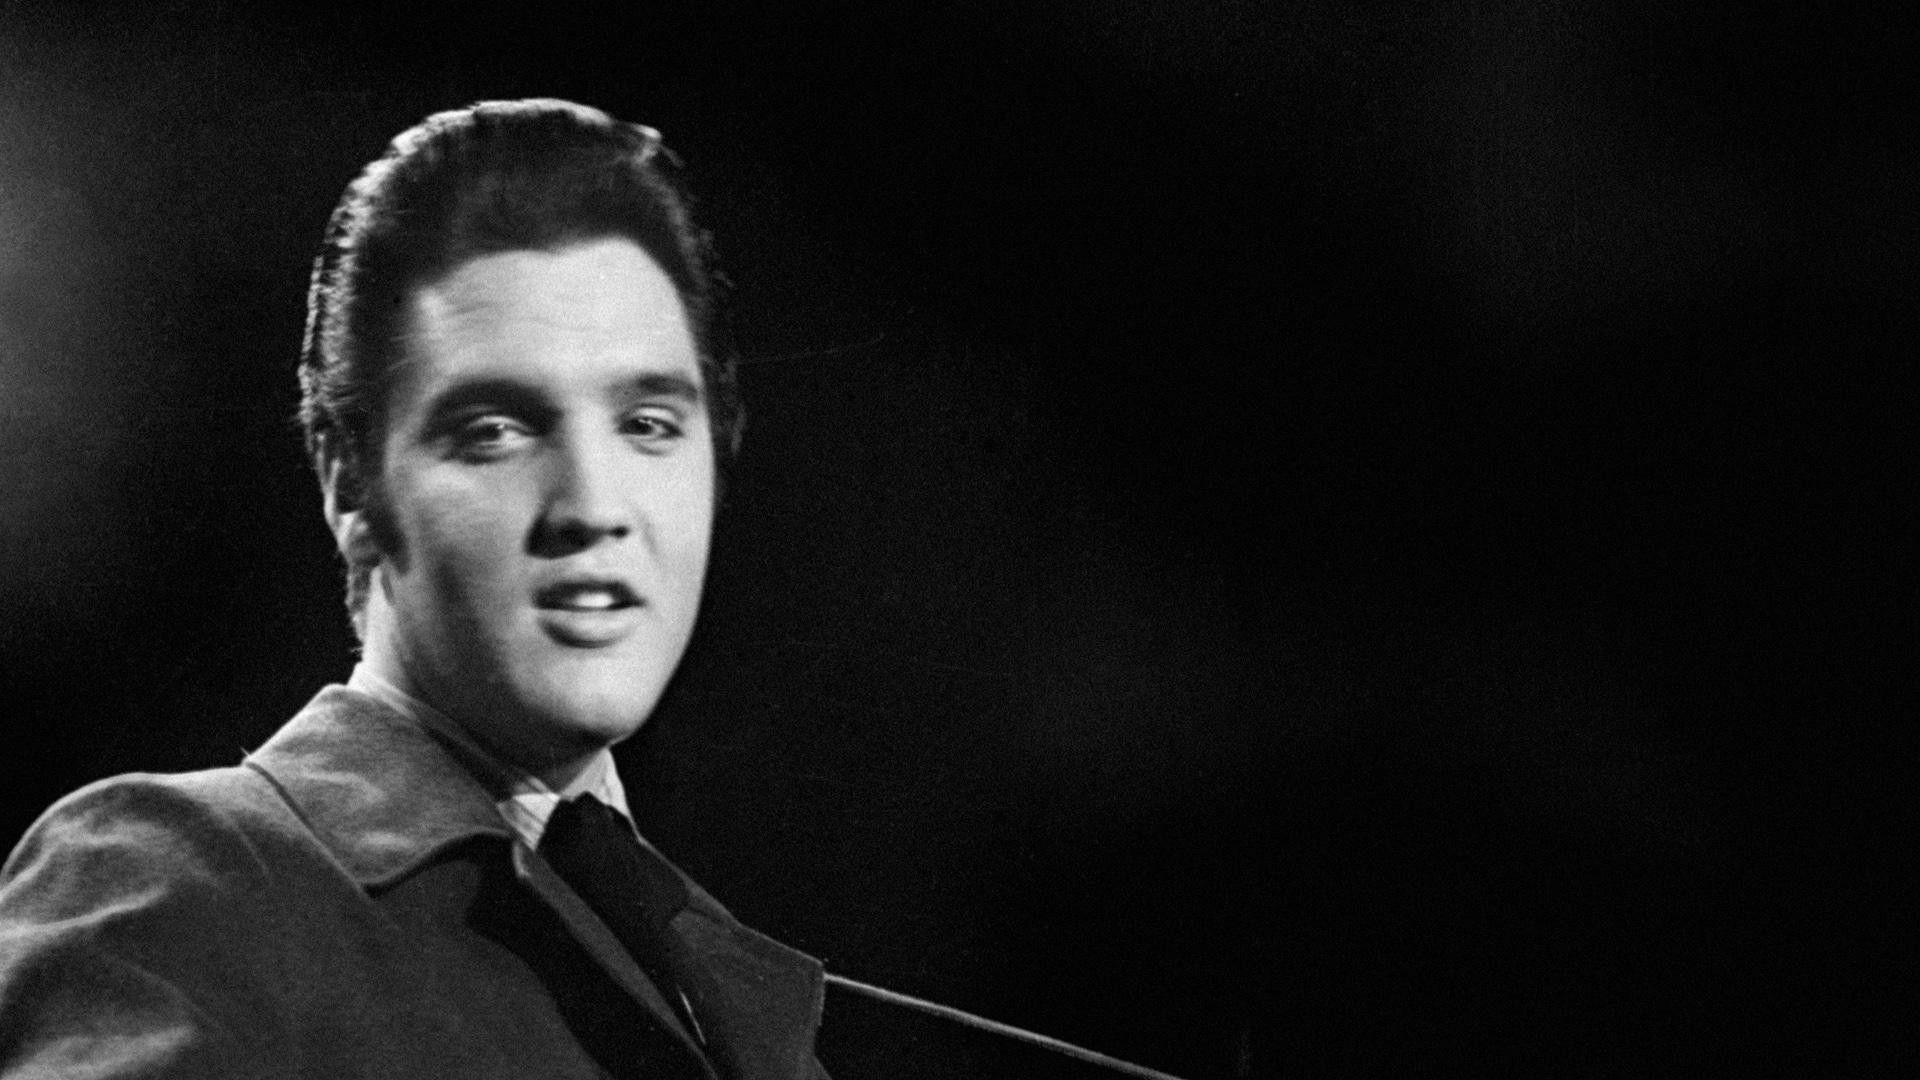 Elvis Presley Wallpapers - Top Free Elvis Presley Backgrounds ...